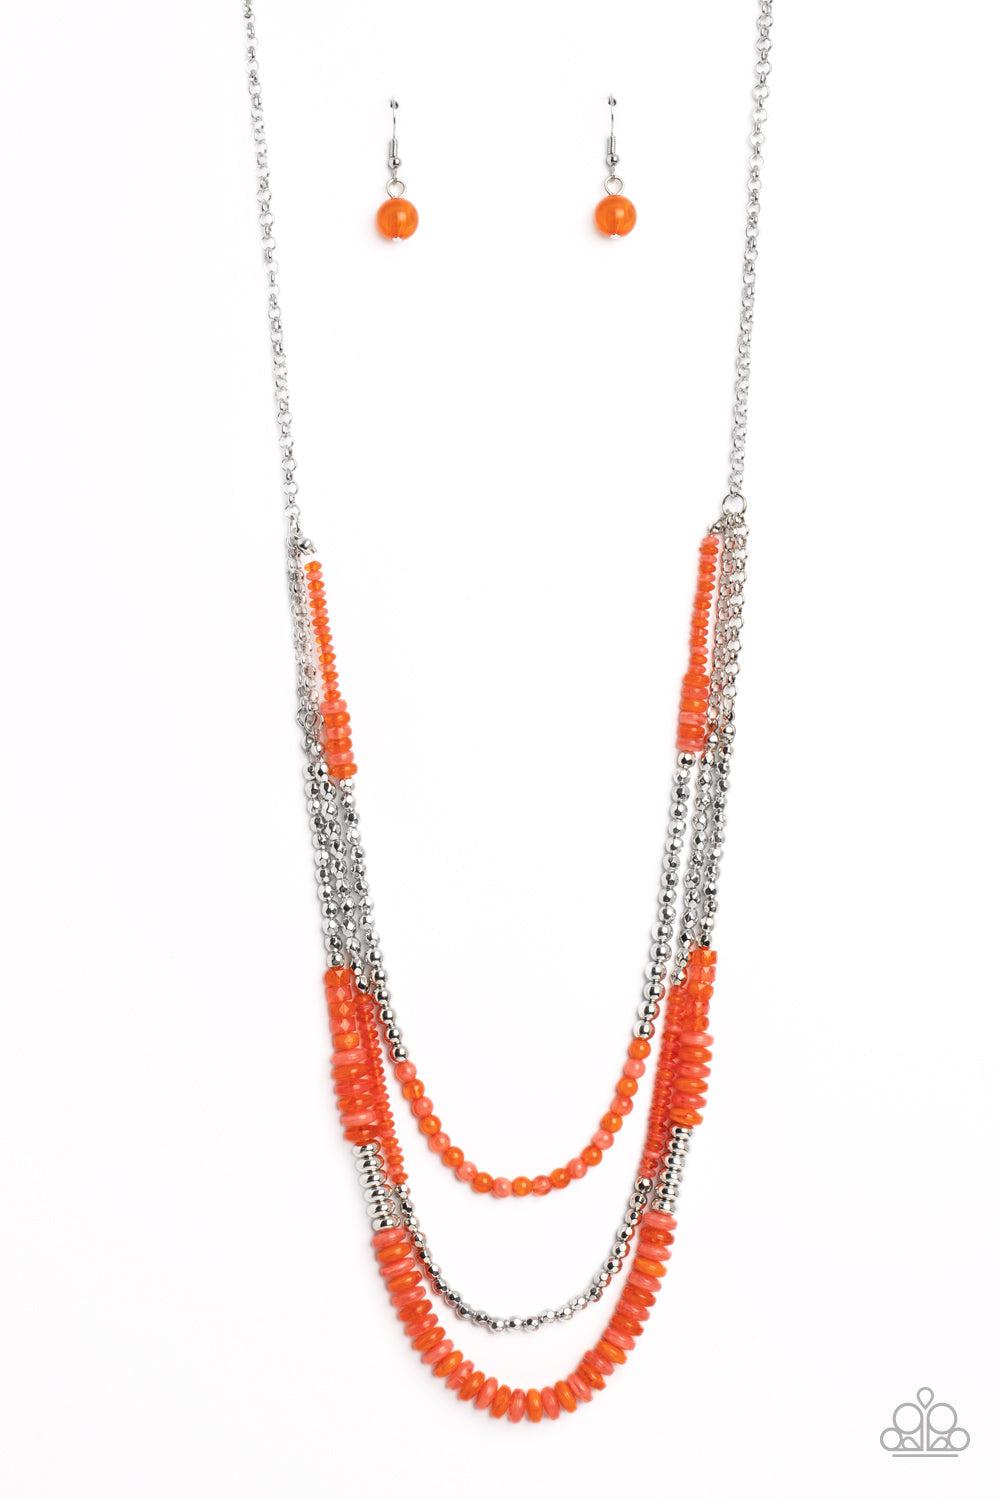 Newly Neverland Orange Necklace - Paparazzi Accessories- lightbox - CarasShop.com - $5 Jewelry by Cara Jewels